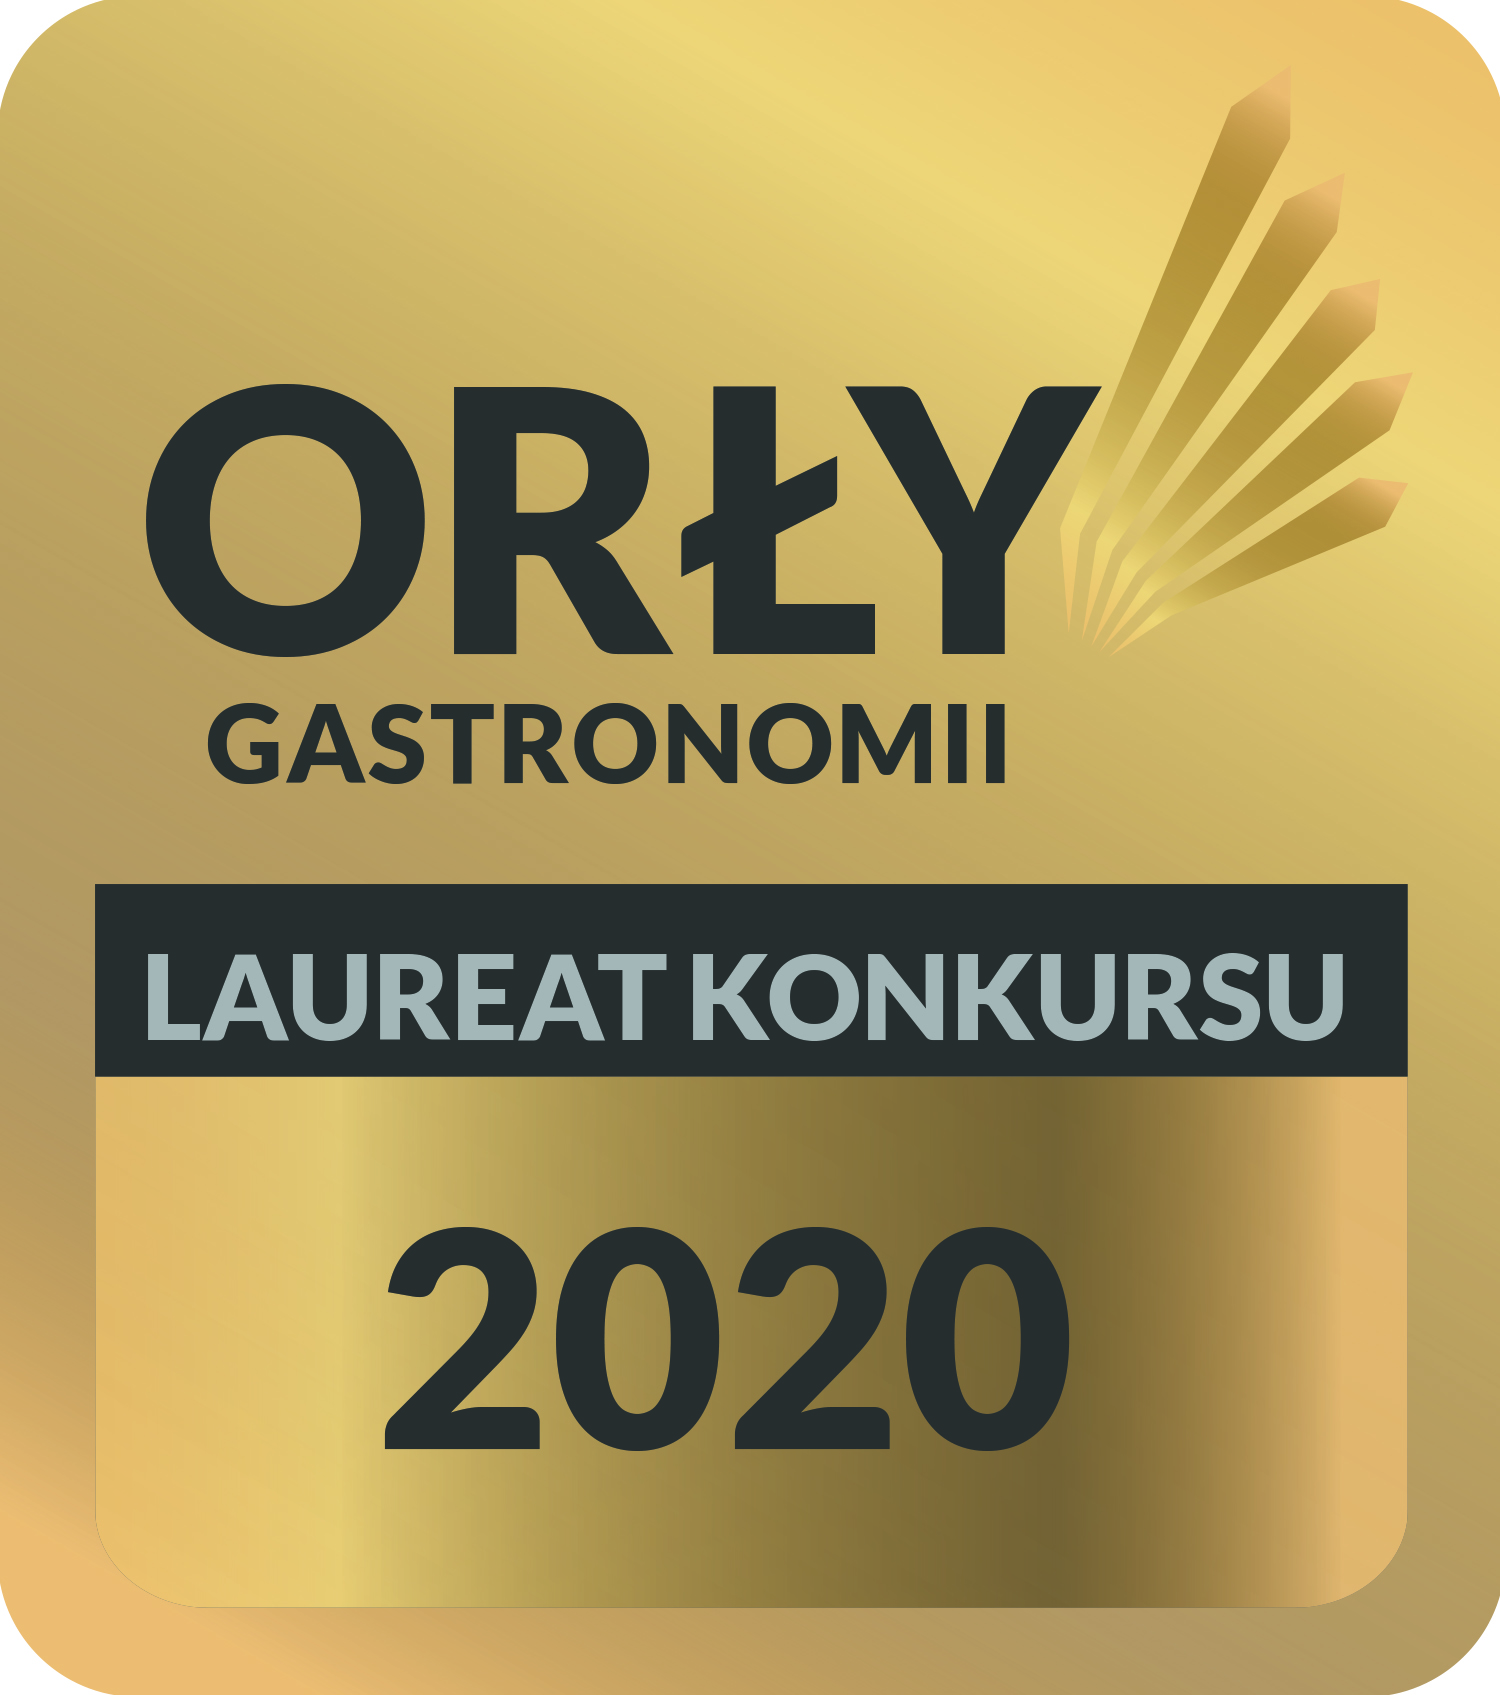 Laureat konkursu orły gastronomii 2020